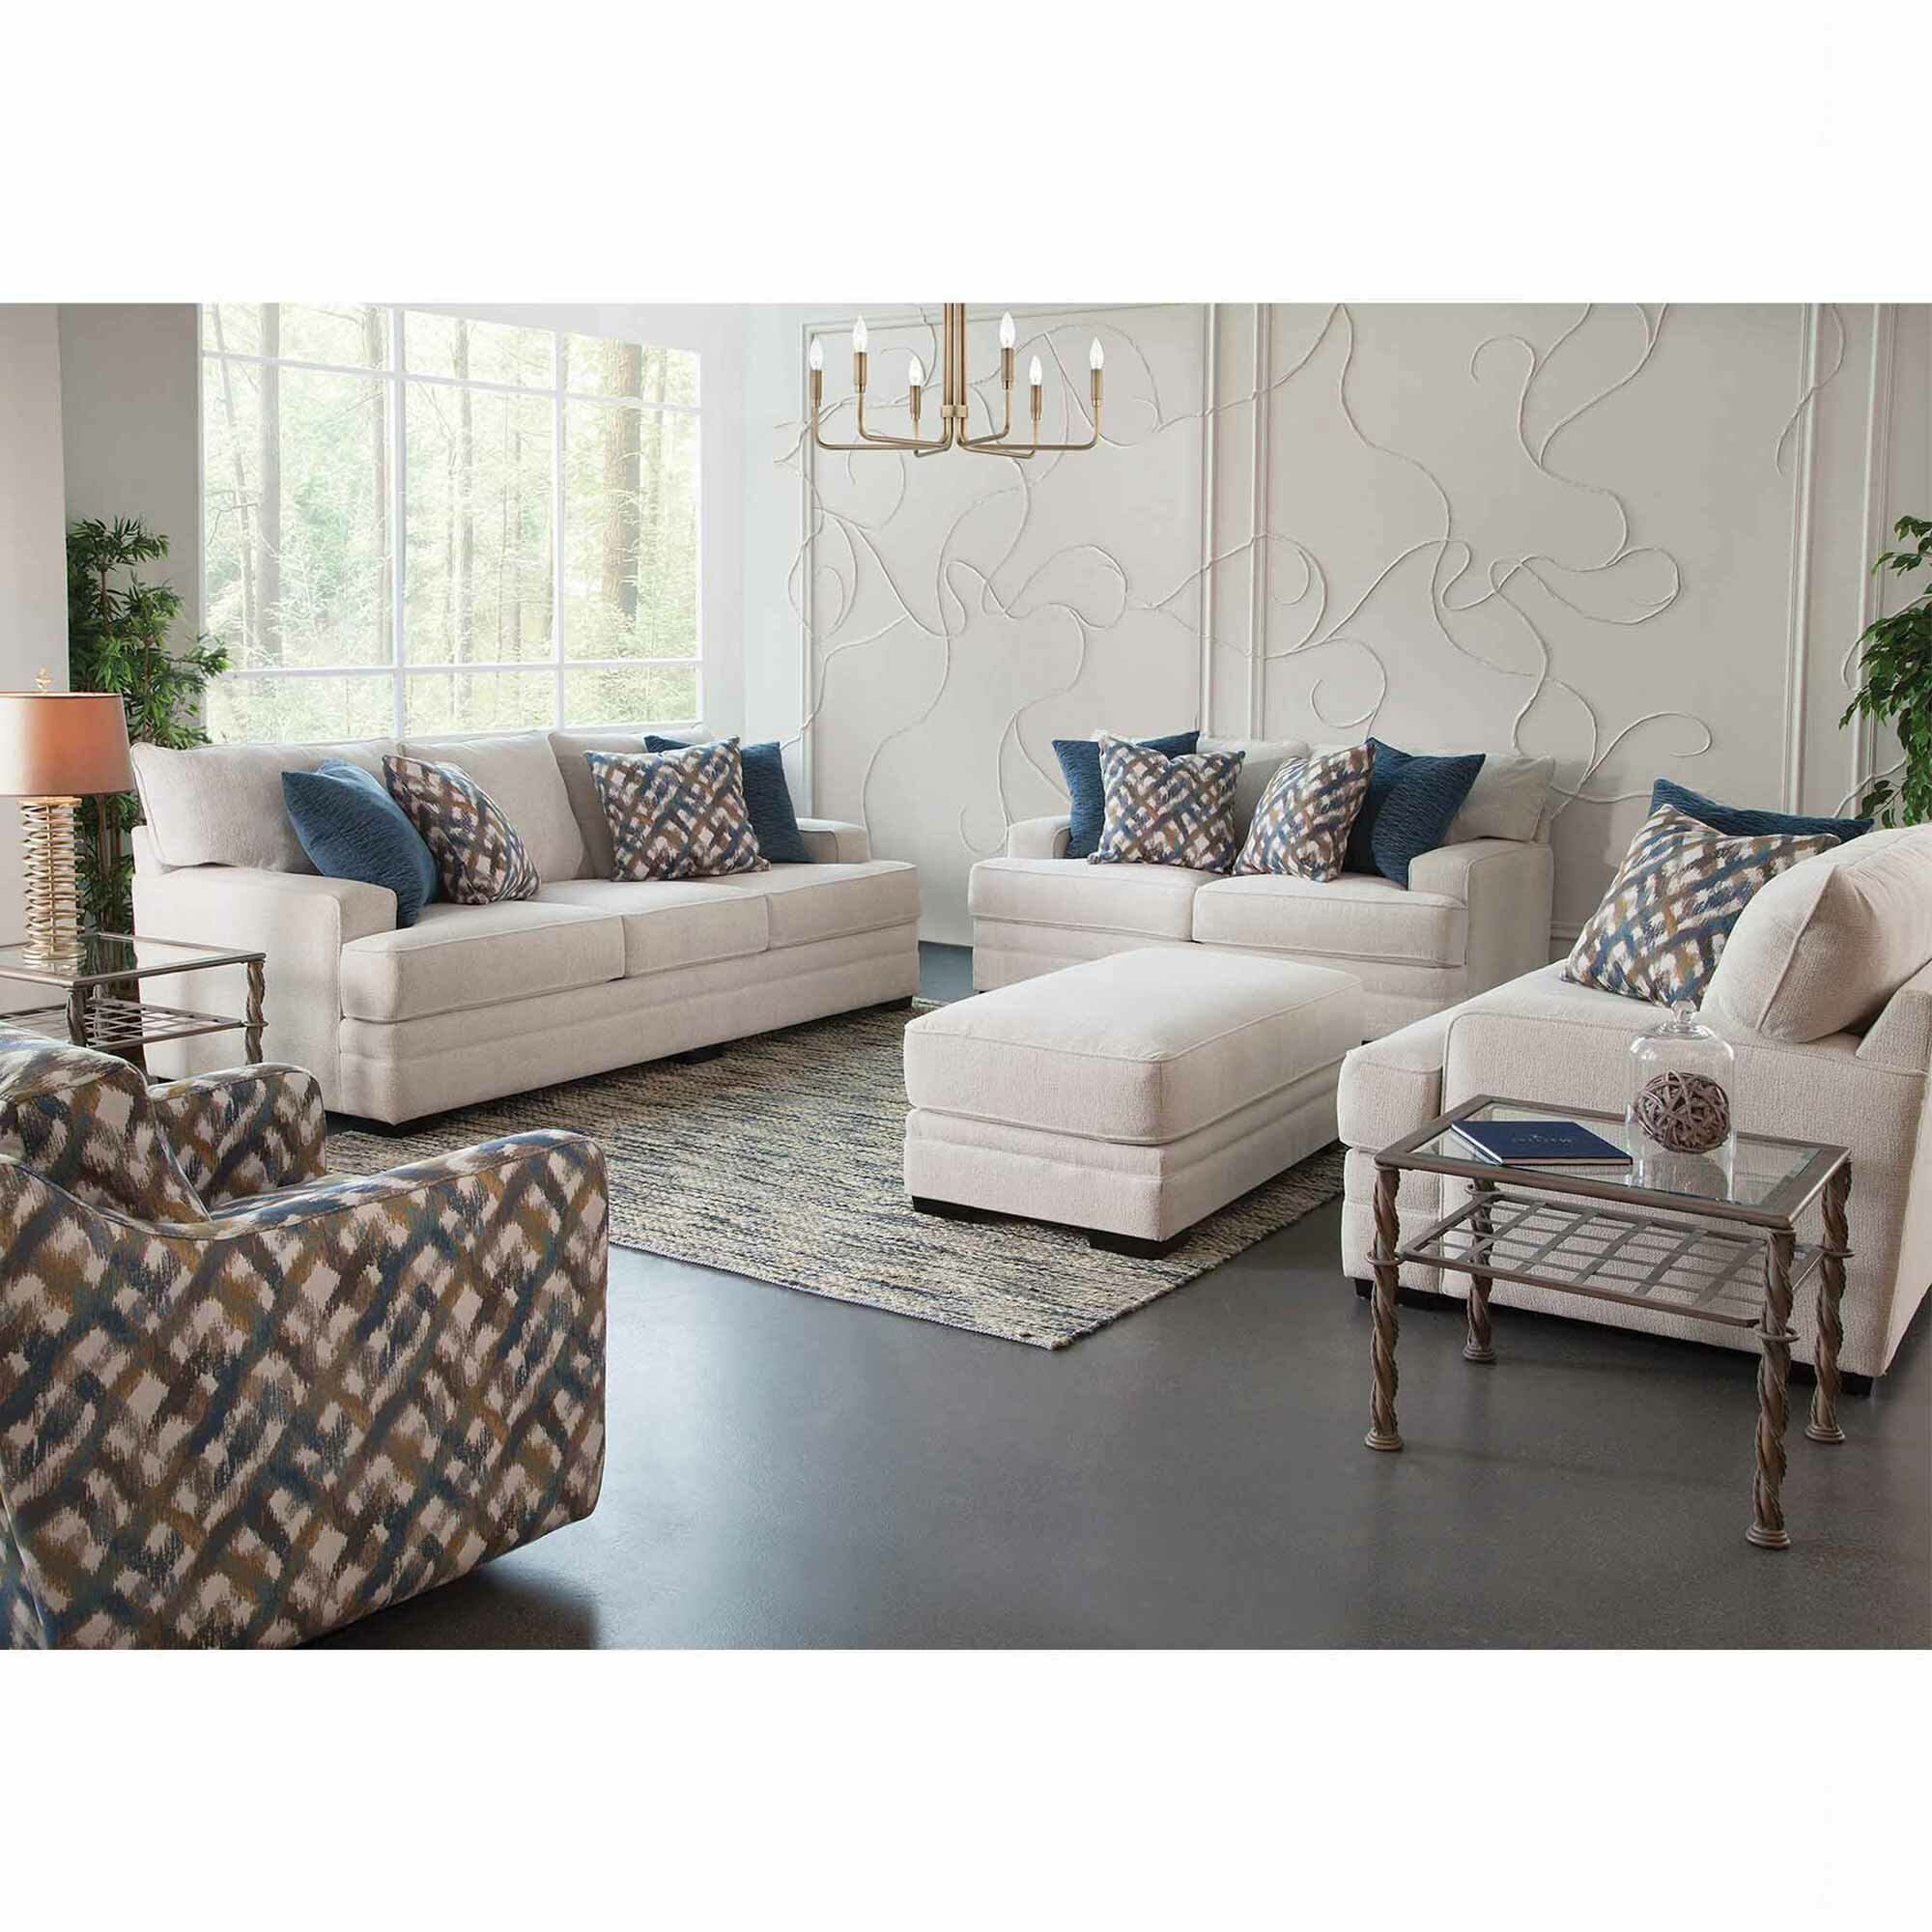 Birch Lane Delp Configurable Living Room Set Reviews Wayfair